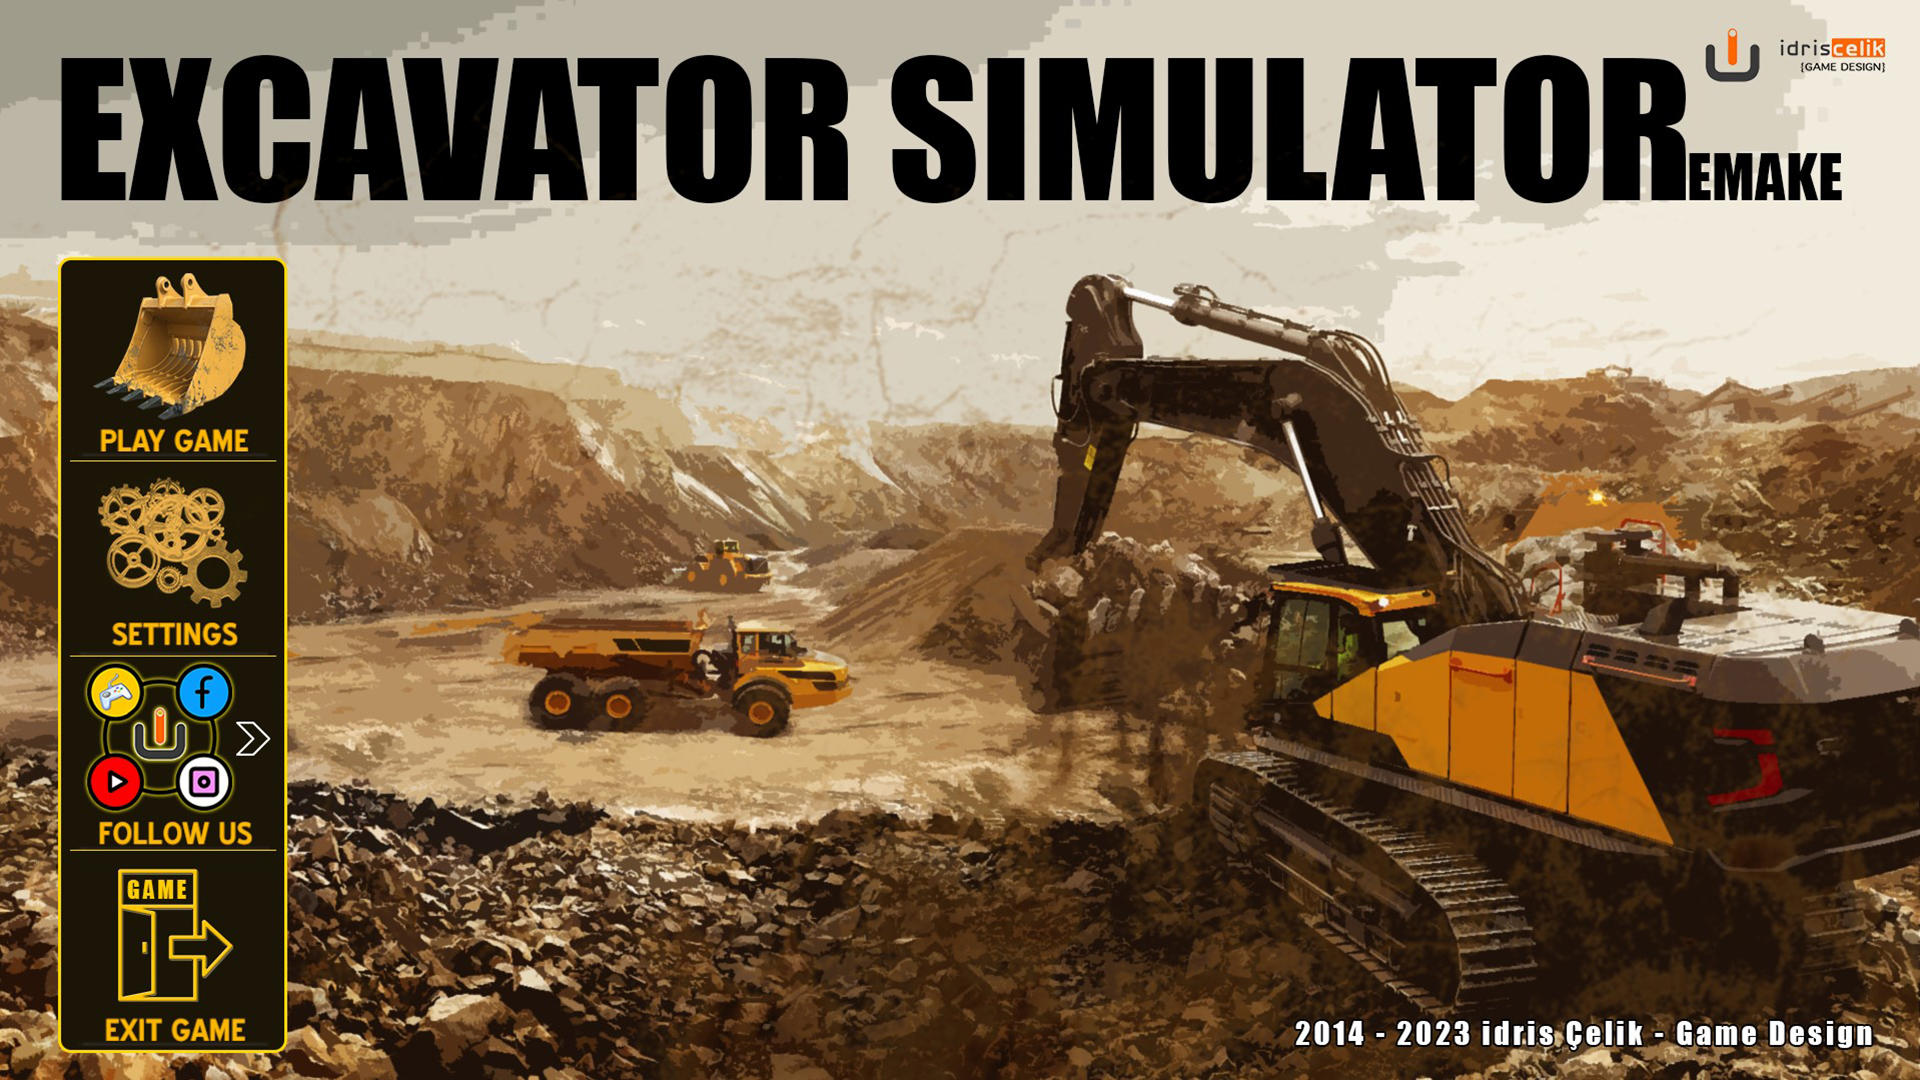 Screenshot 1 of Excavator Simulator REMAKE 